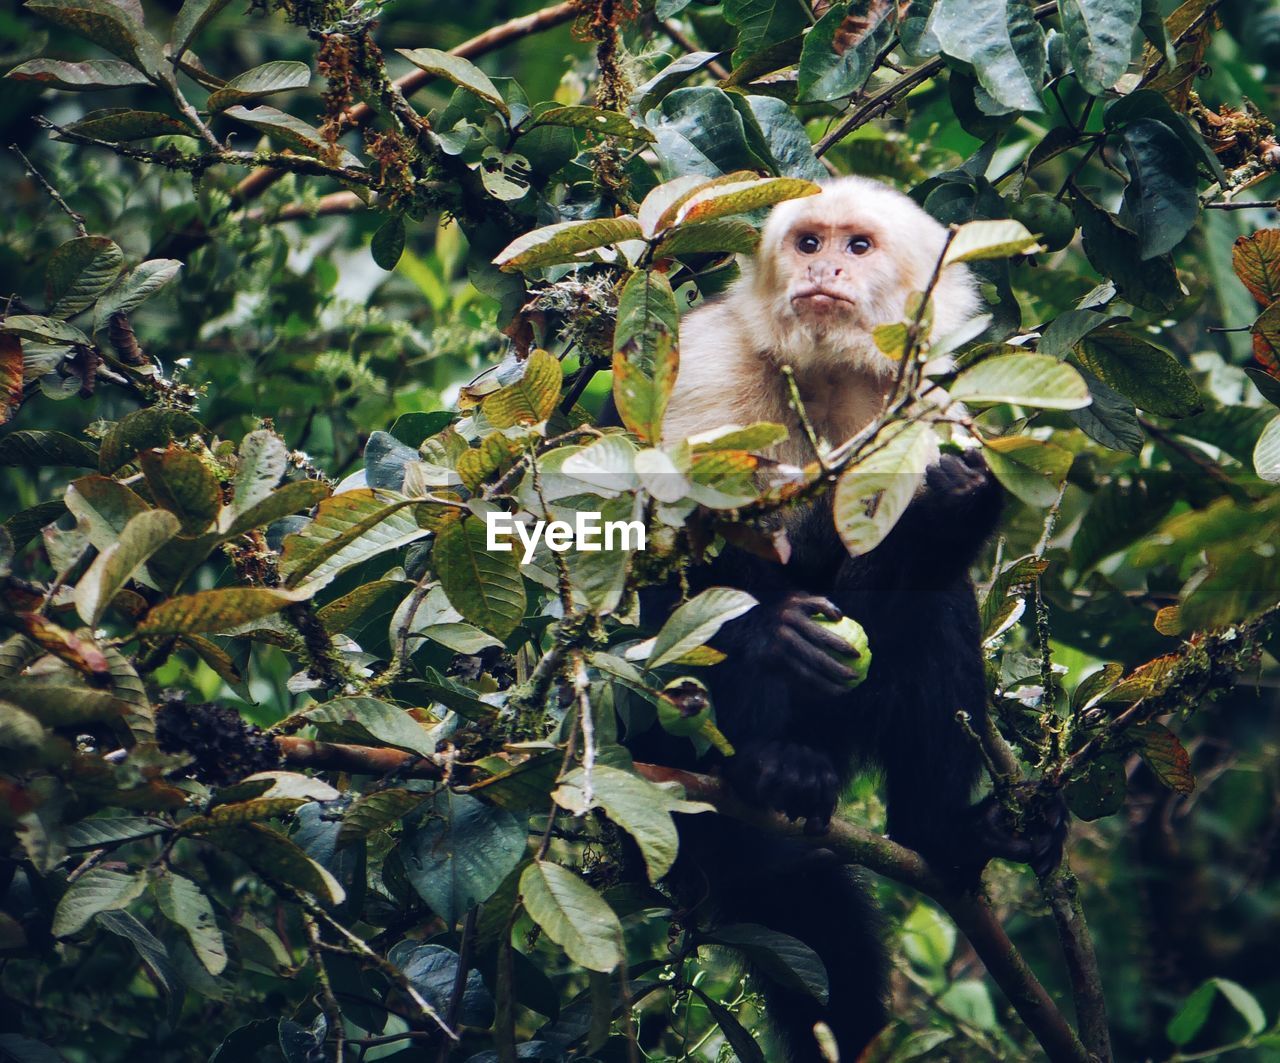 White-headed capuchin sitting on tree branch